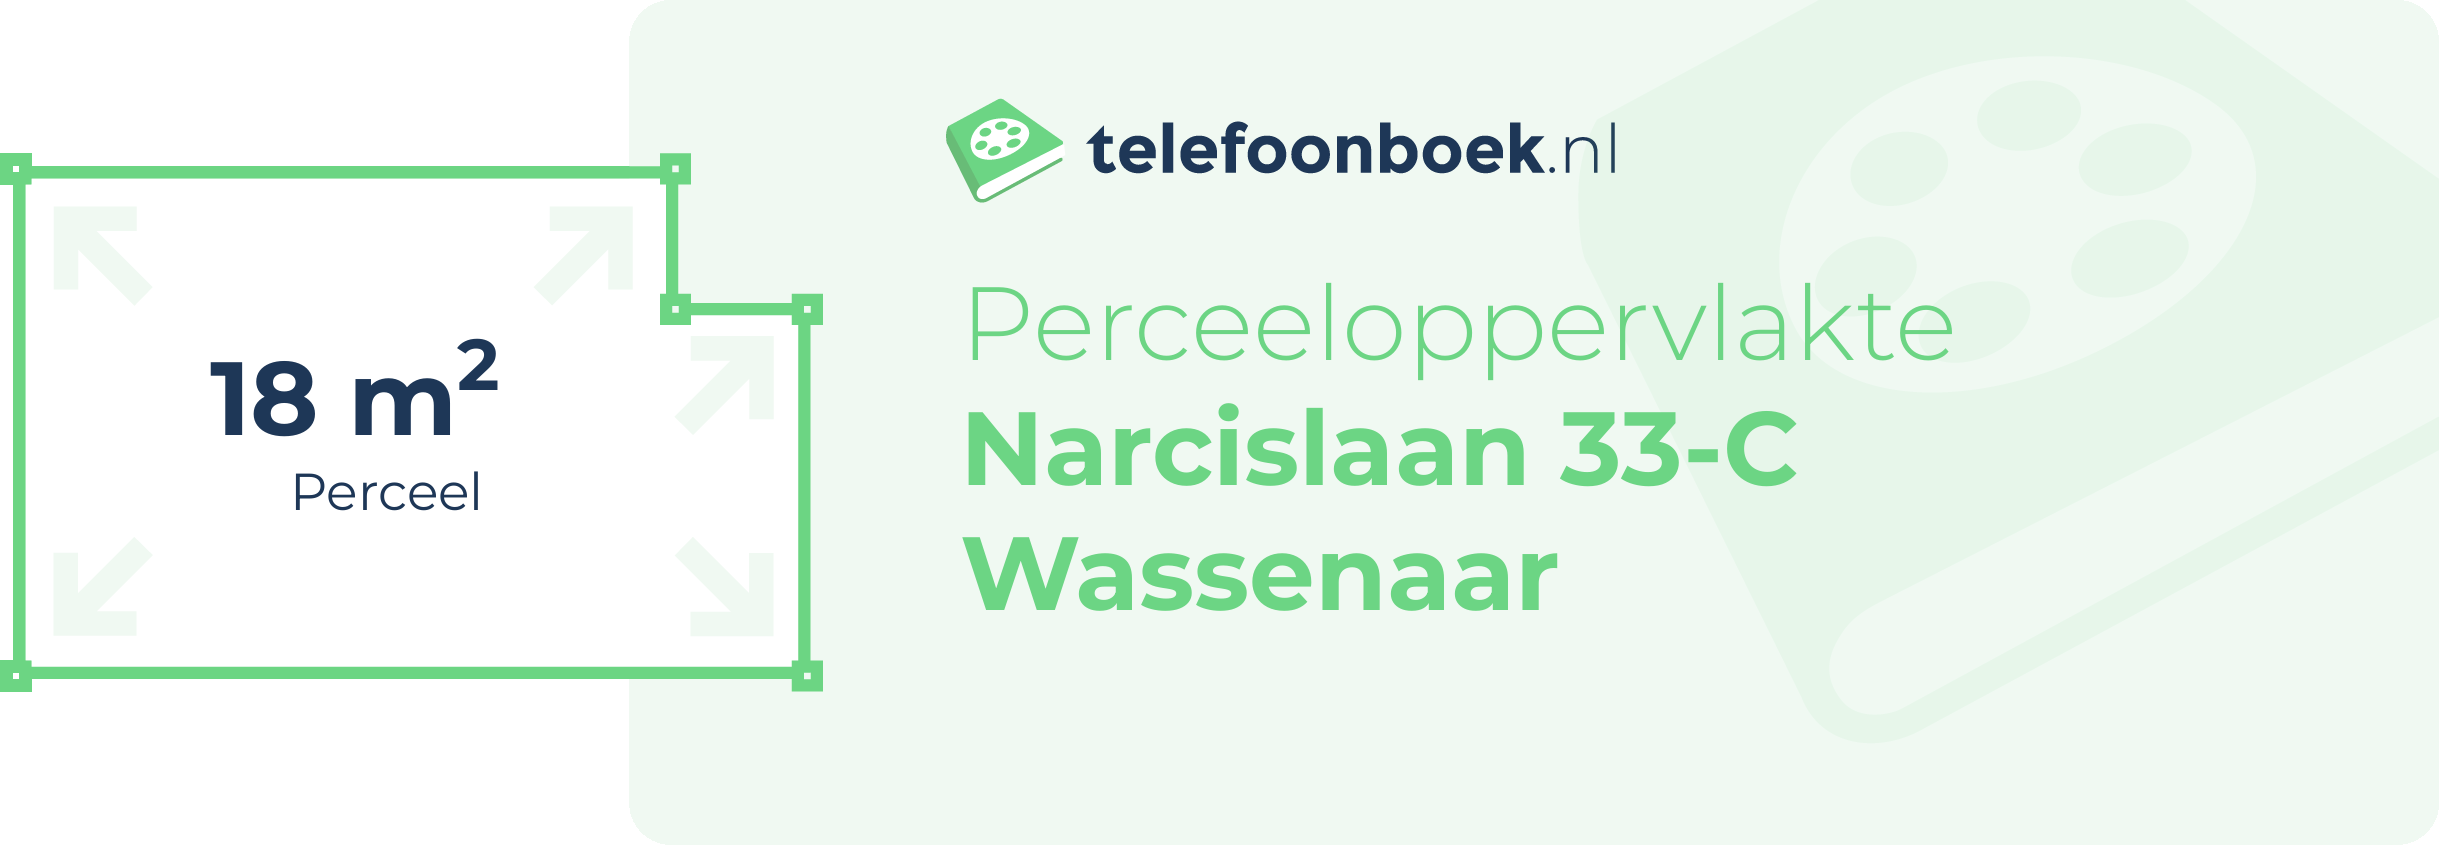 Perceeloppervlakte Narcislaan 33-C Wassenaar